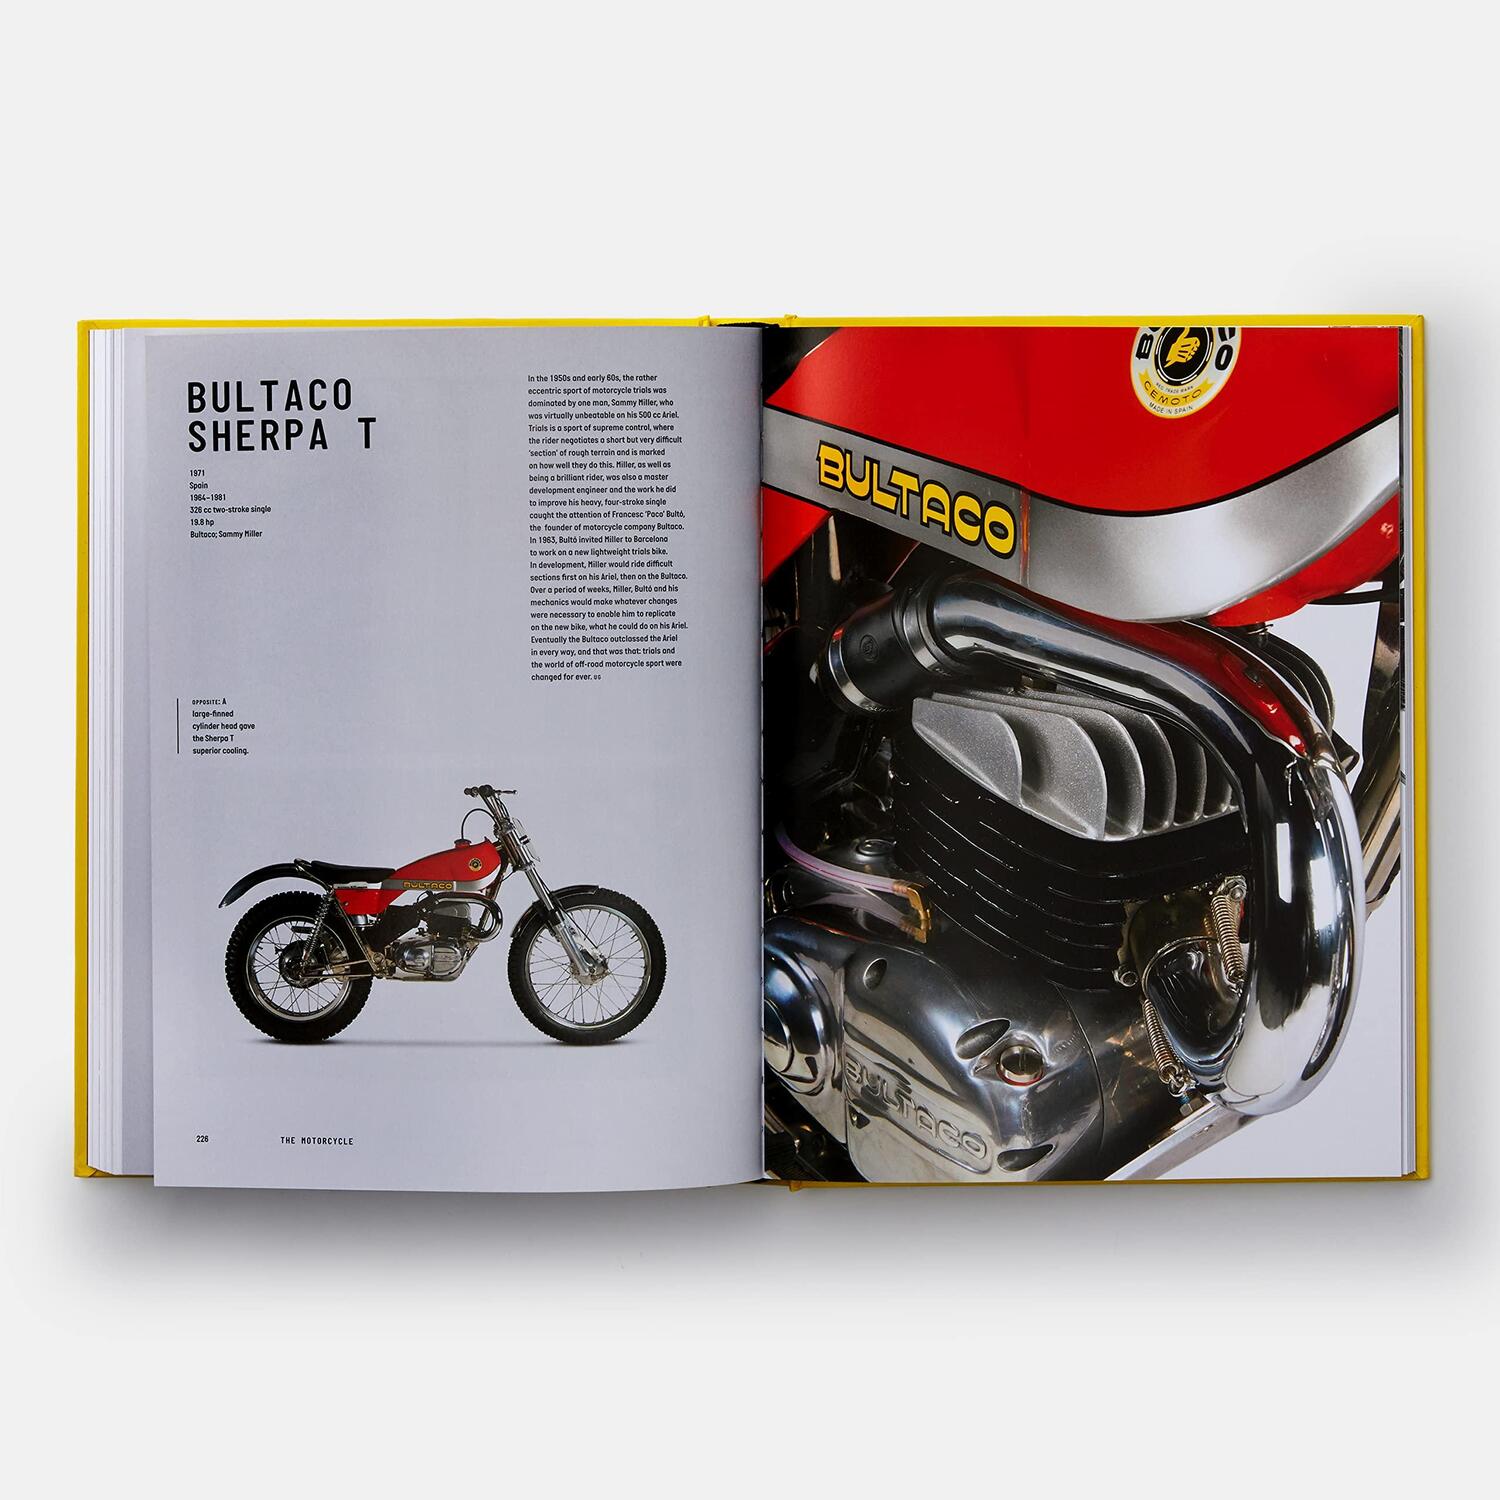 Bild: 9781838666569 | The Motorcycle | Design, Art, Desire | Charles M Falco (u. a.) | Buch